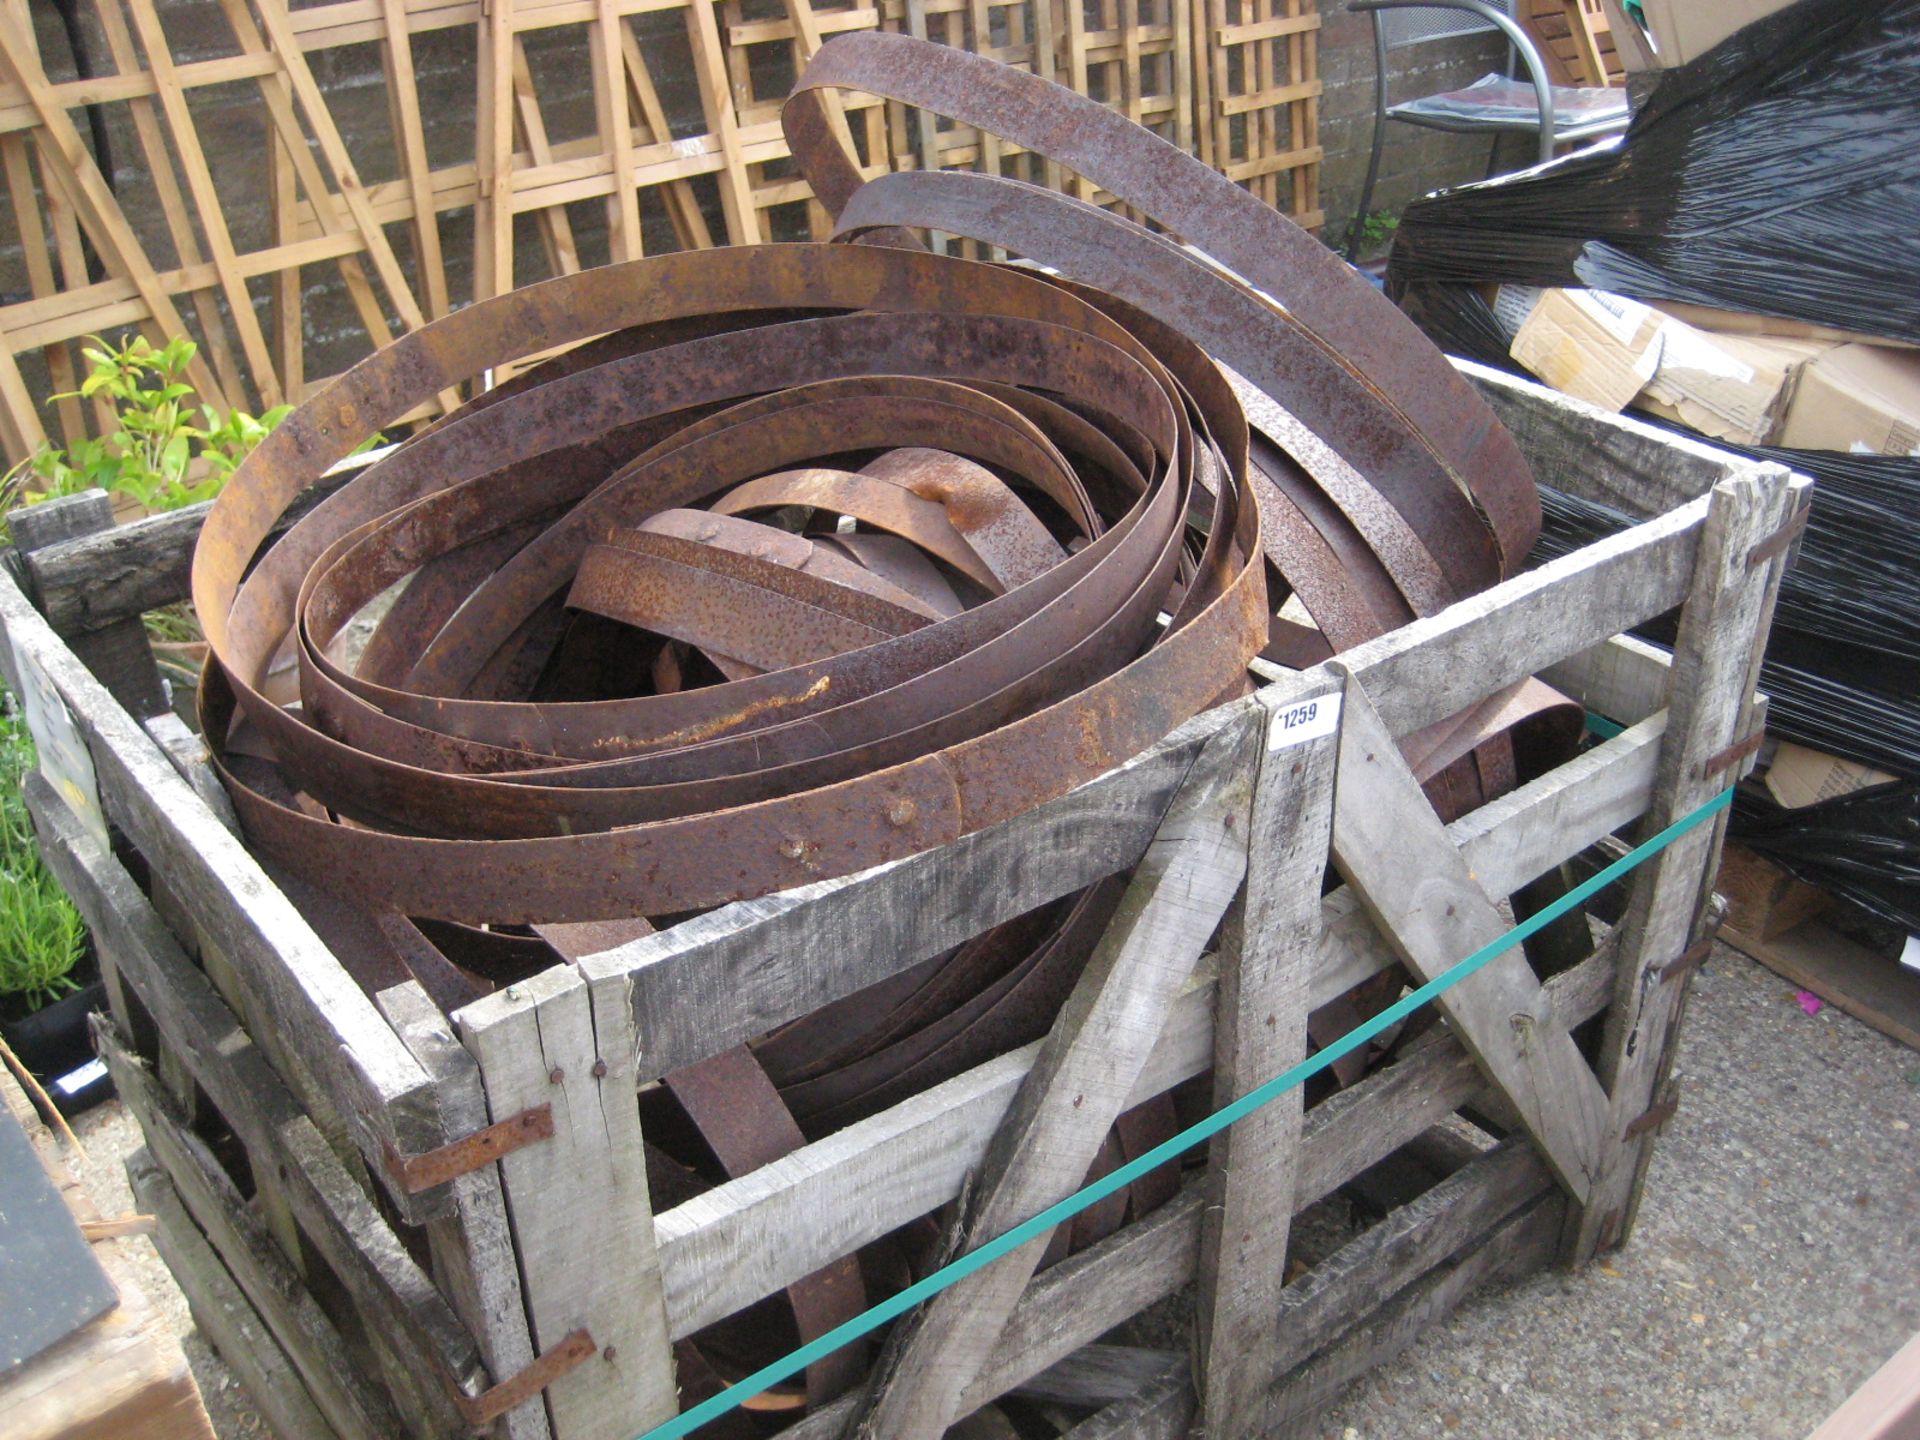 (1197) Pallet containing metal barrel bands